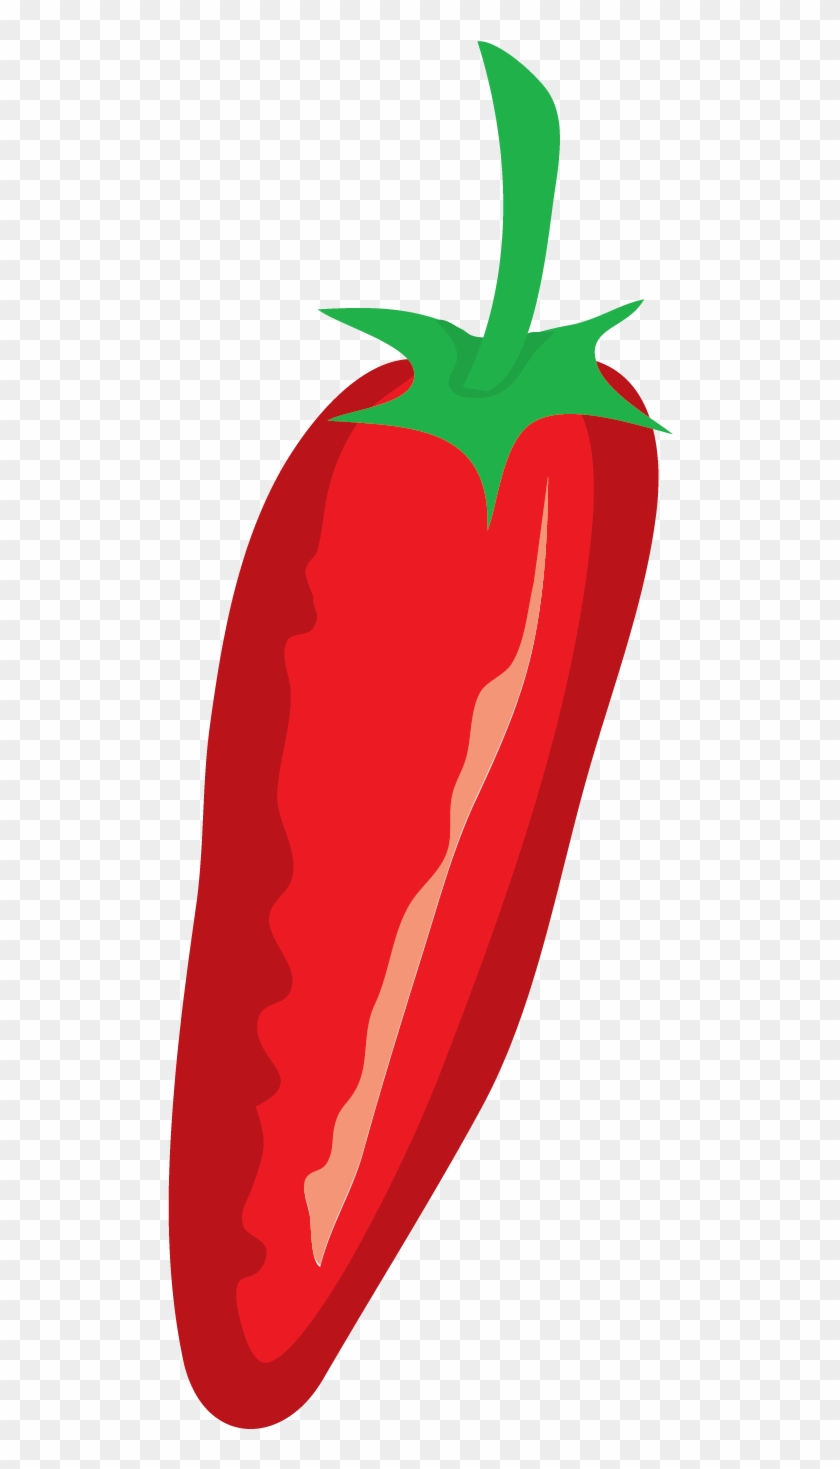 Chili Pepper Clip Art - Chili Pepper Clip Art #234715